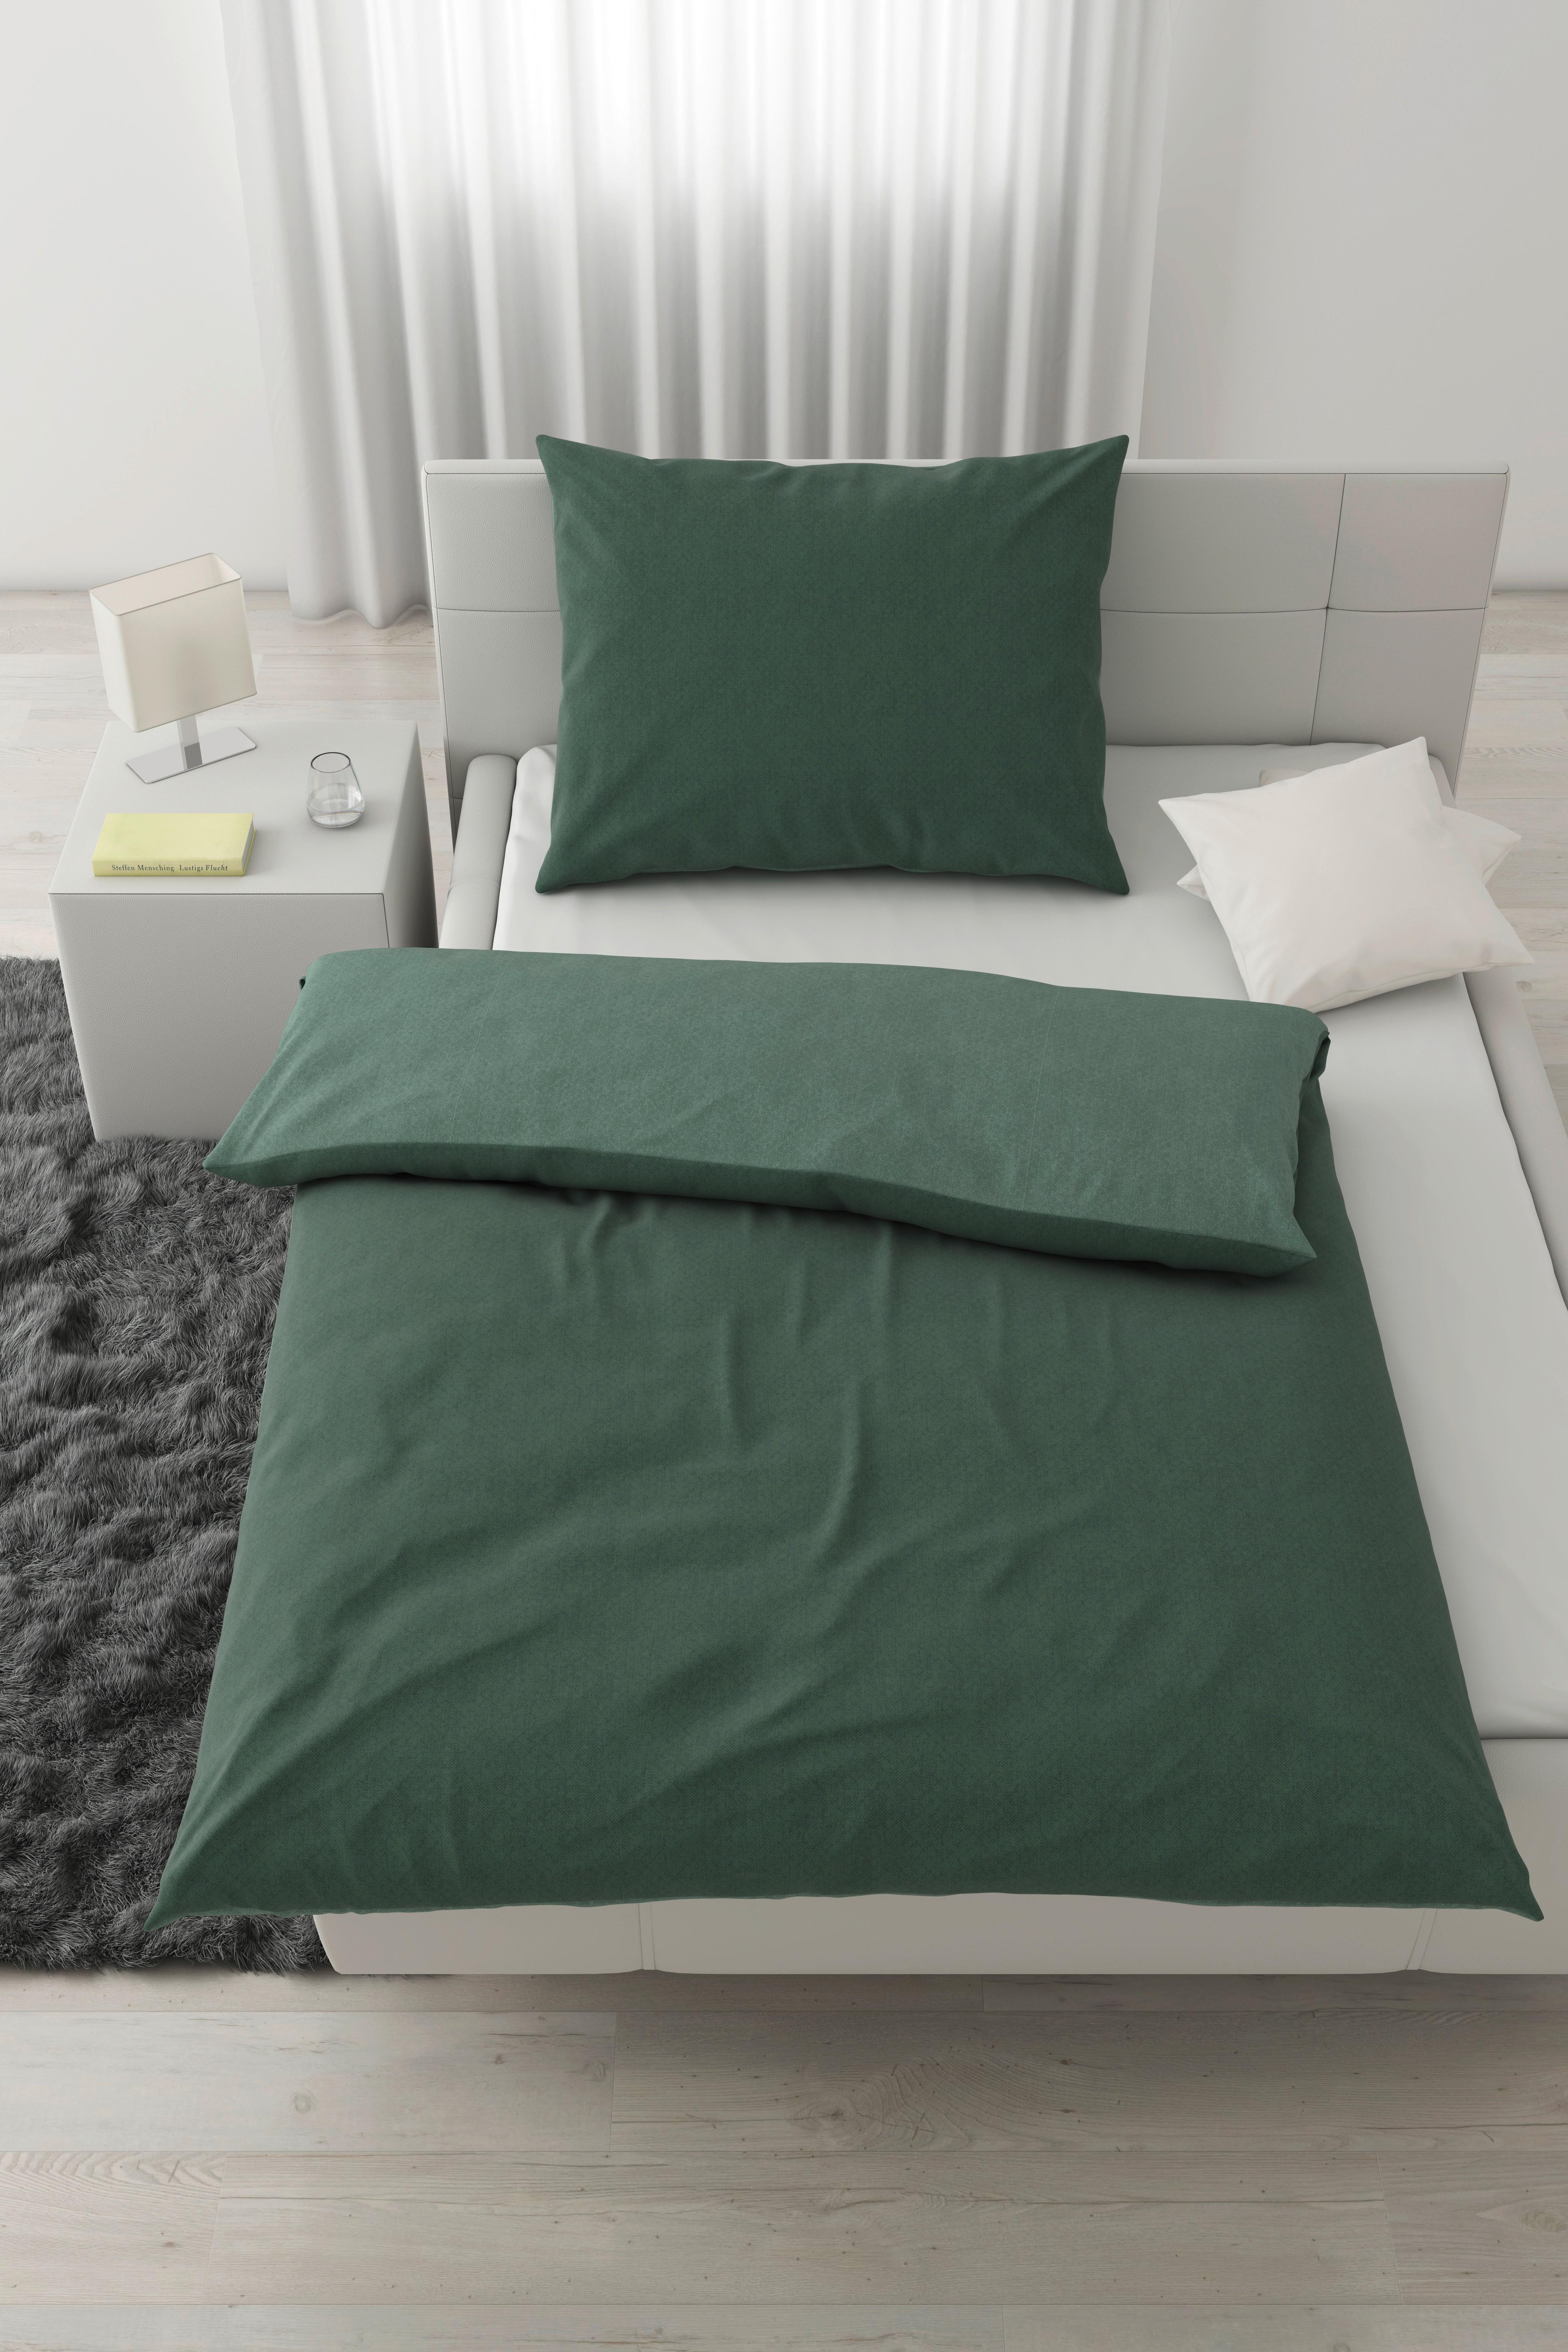 Posteljina 70/90cm 140/200cm Charline - svijetlo zelena/zelena, Konventionell, tekstil (140/200cm) - Modern Living